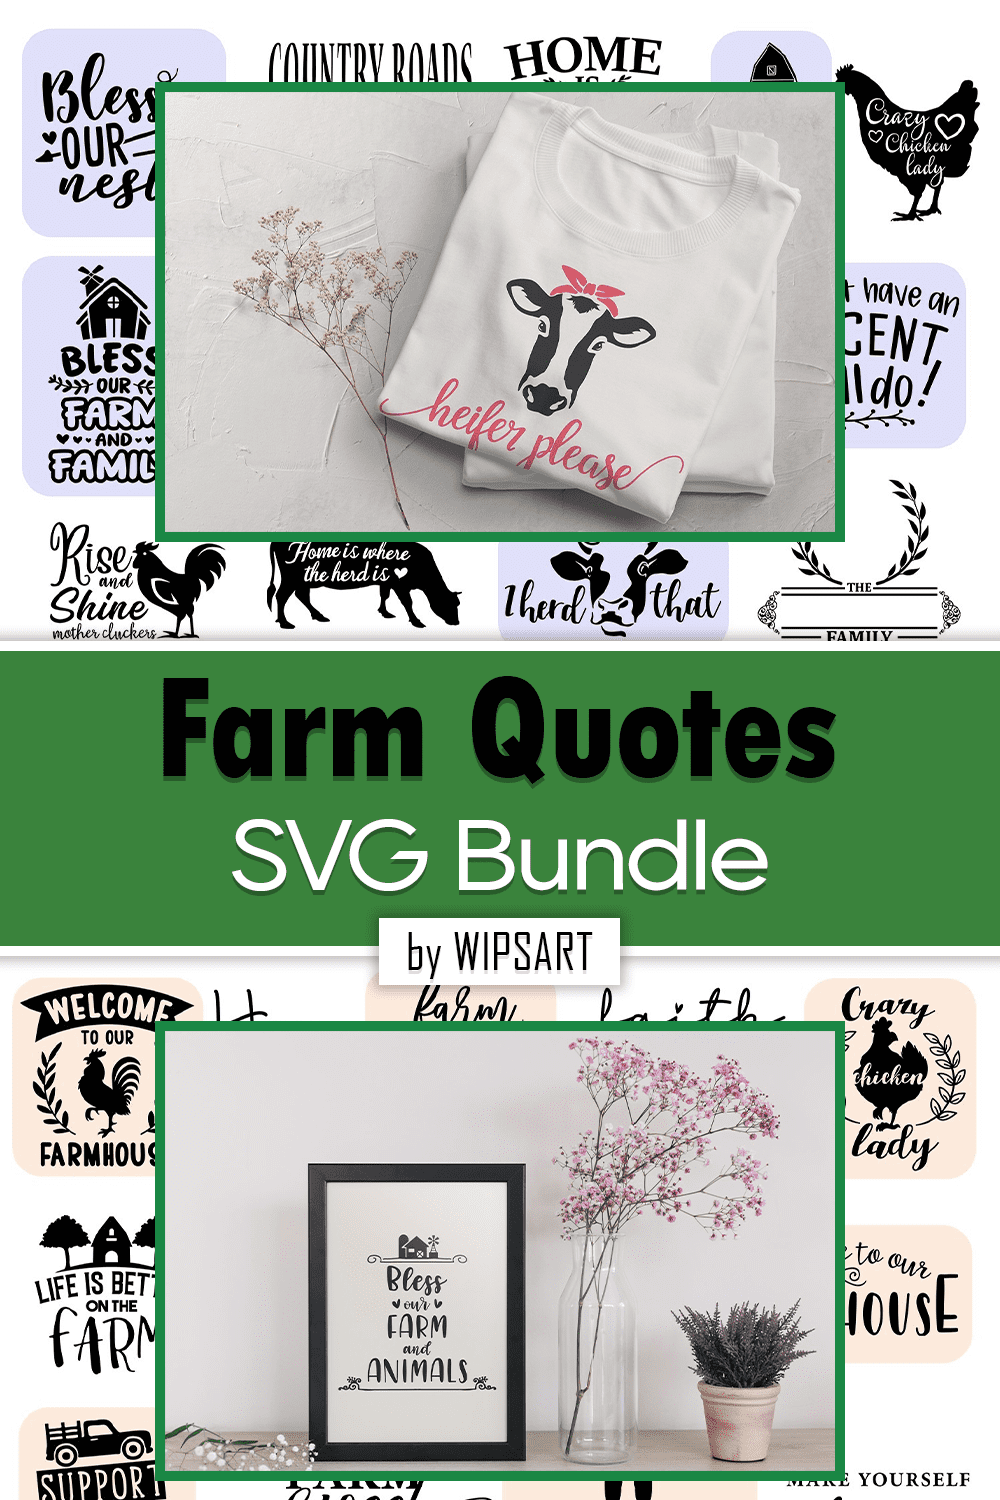 Farm quotes svg bundle with farm animals.